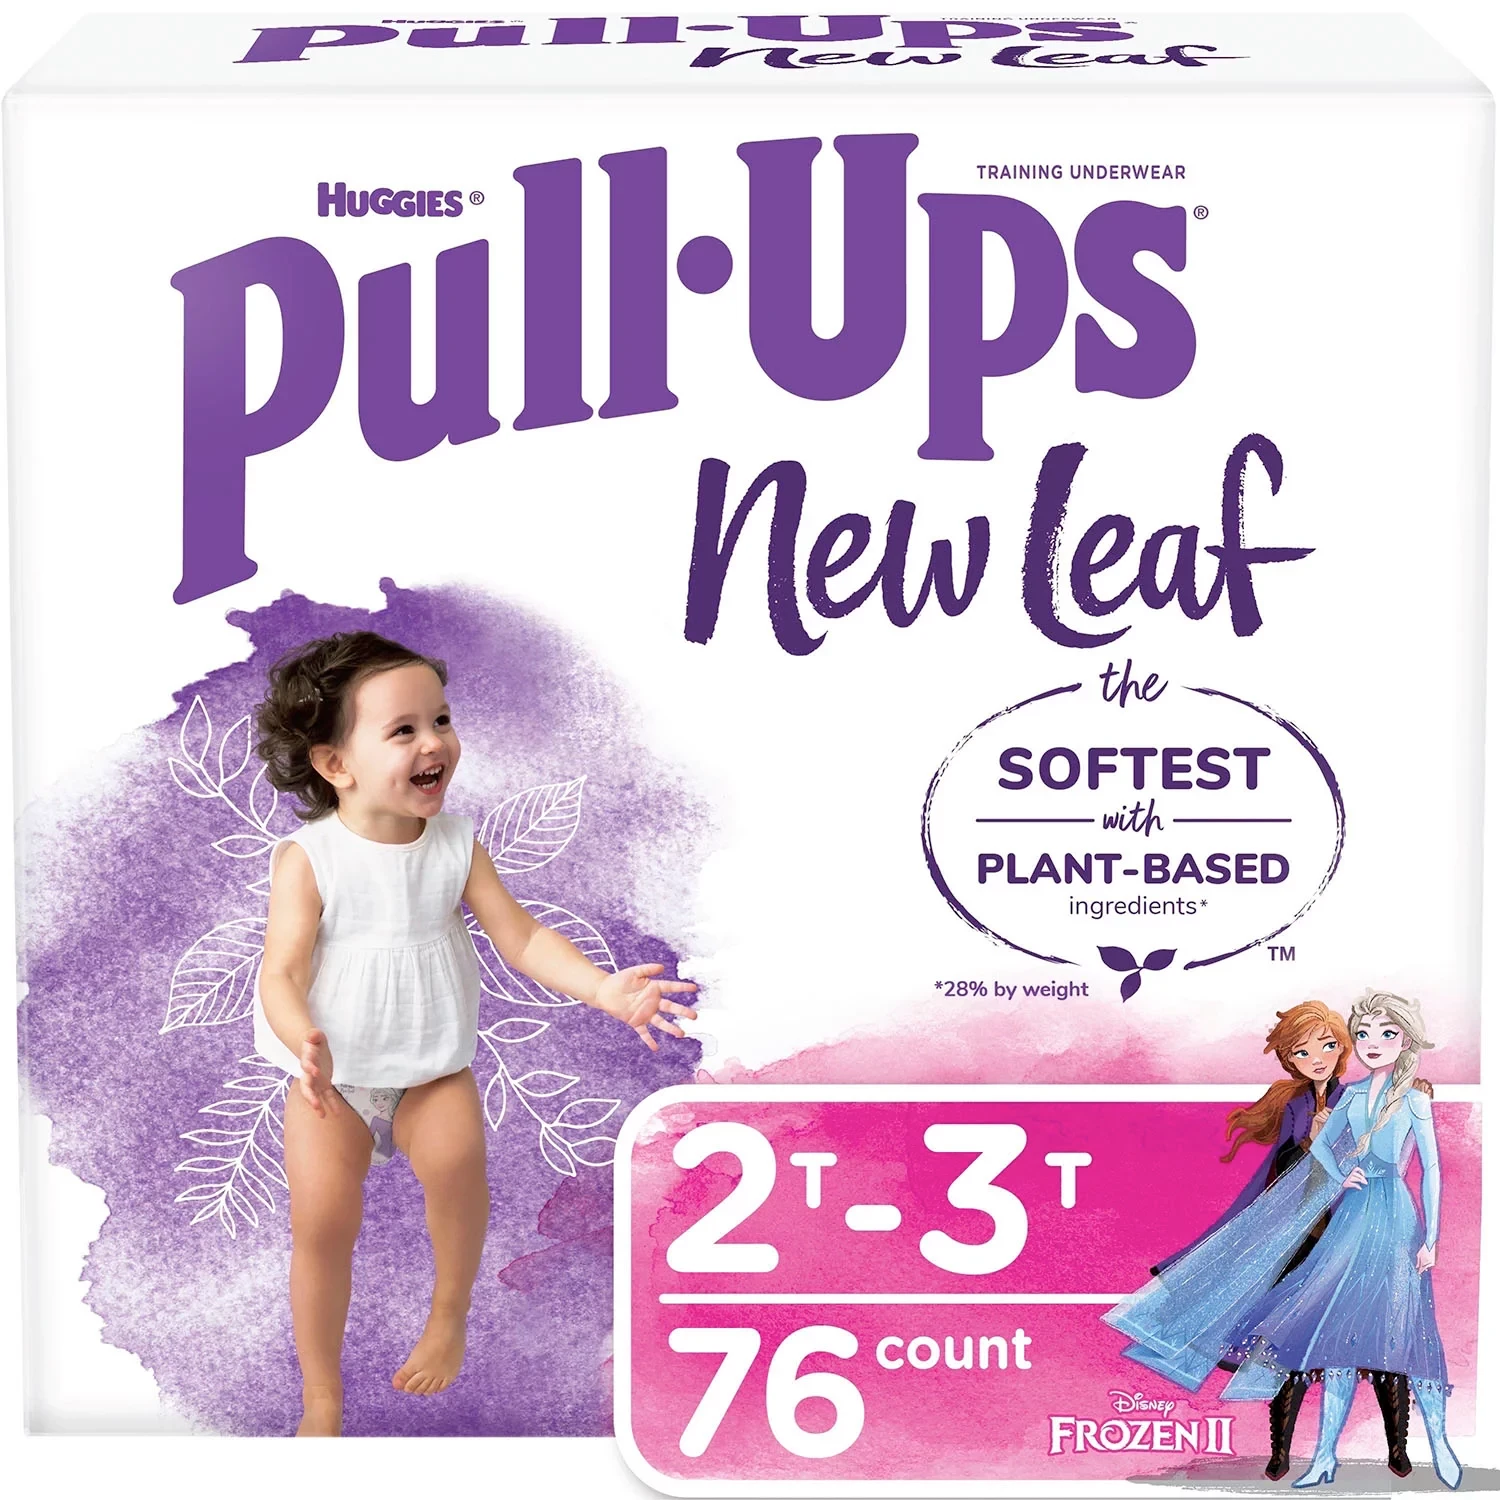 Huggies Pull-Ups New Leaf Training Underwear for Girls, 2T-3T - 76 ct. (18 - 34 lb.)